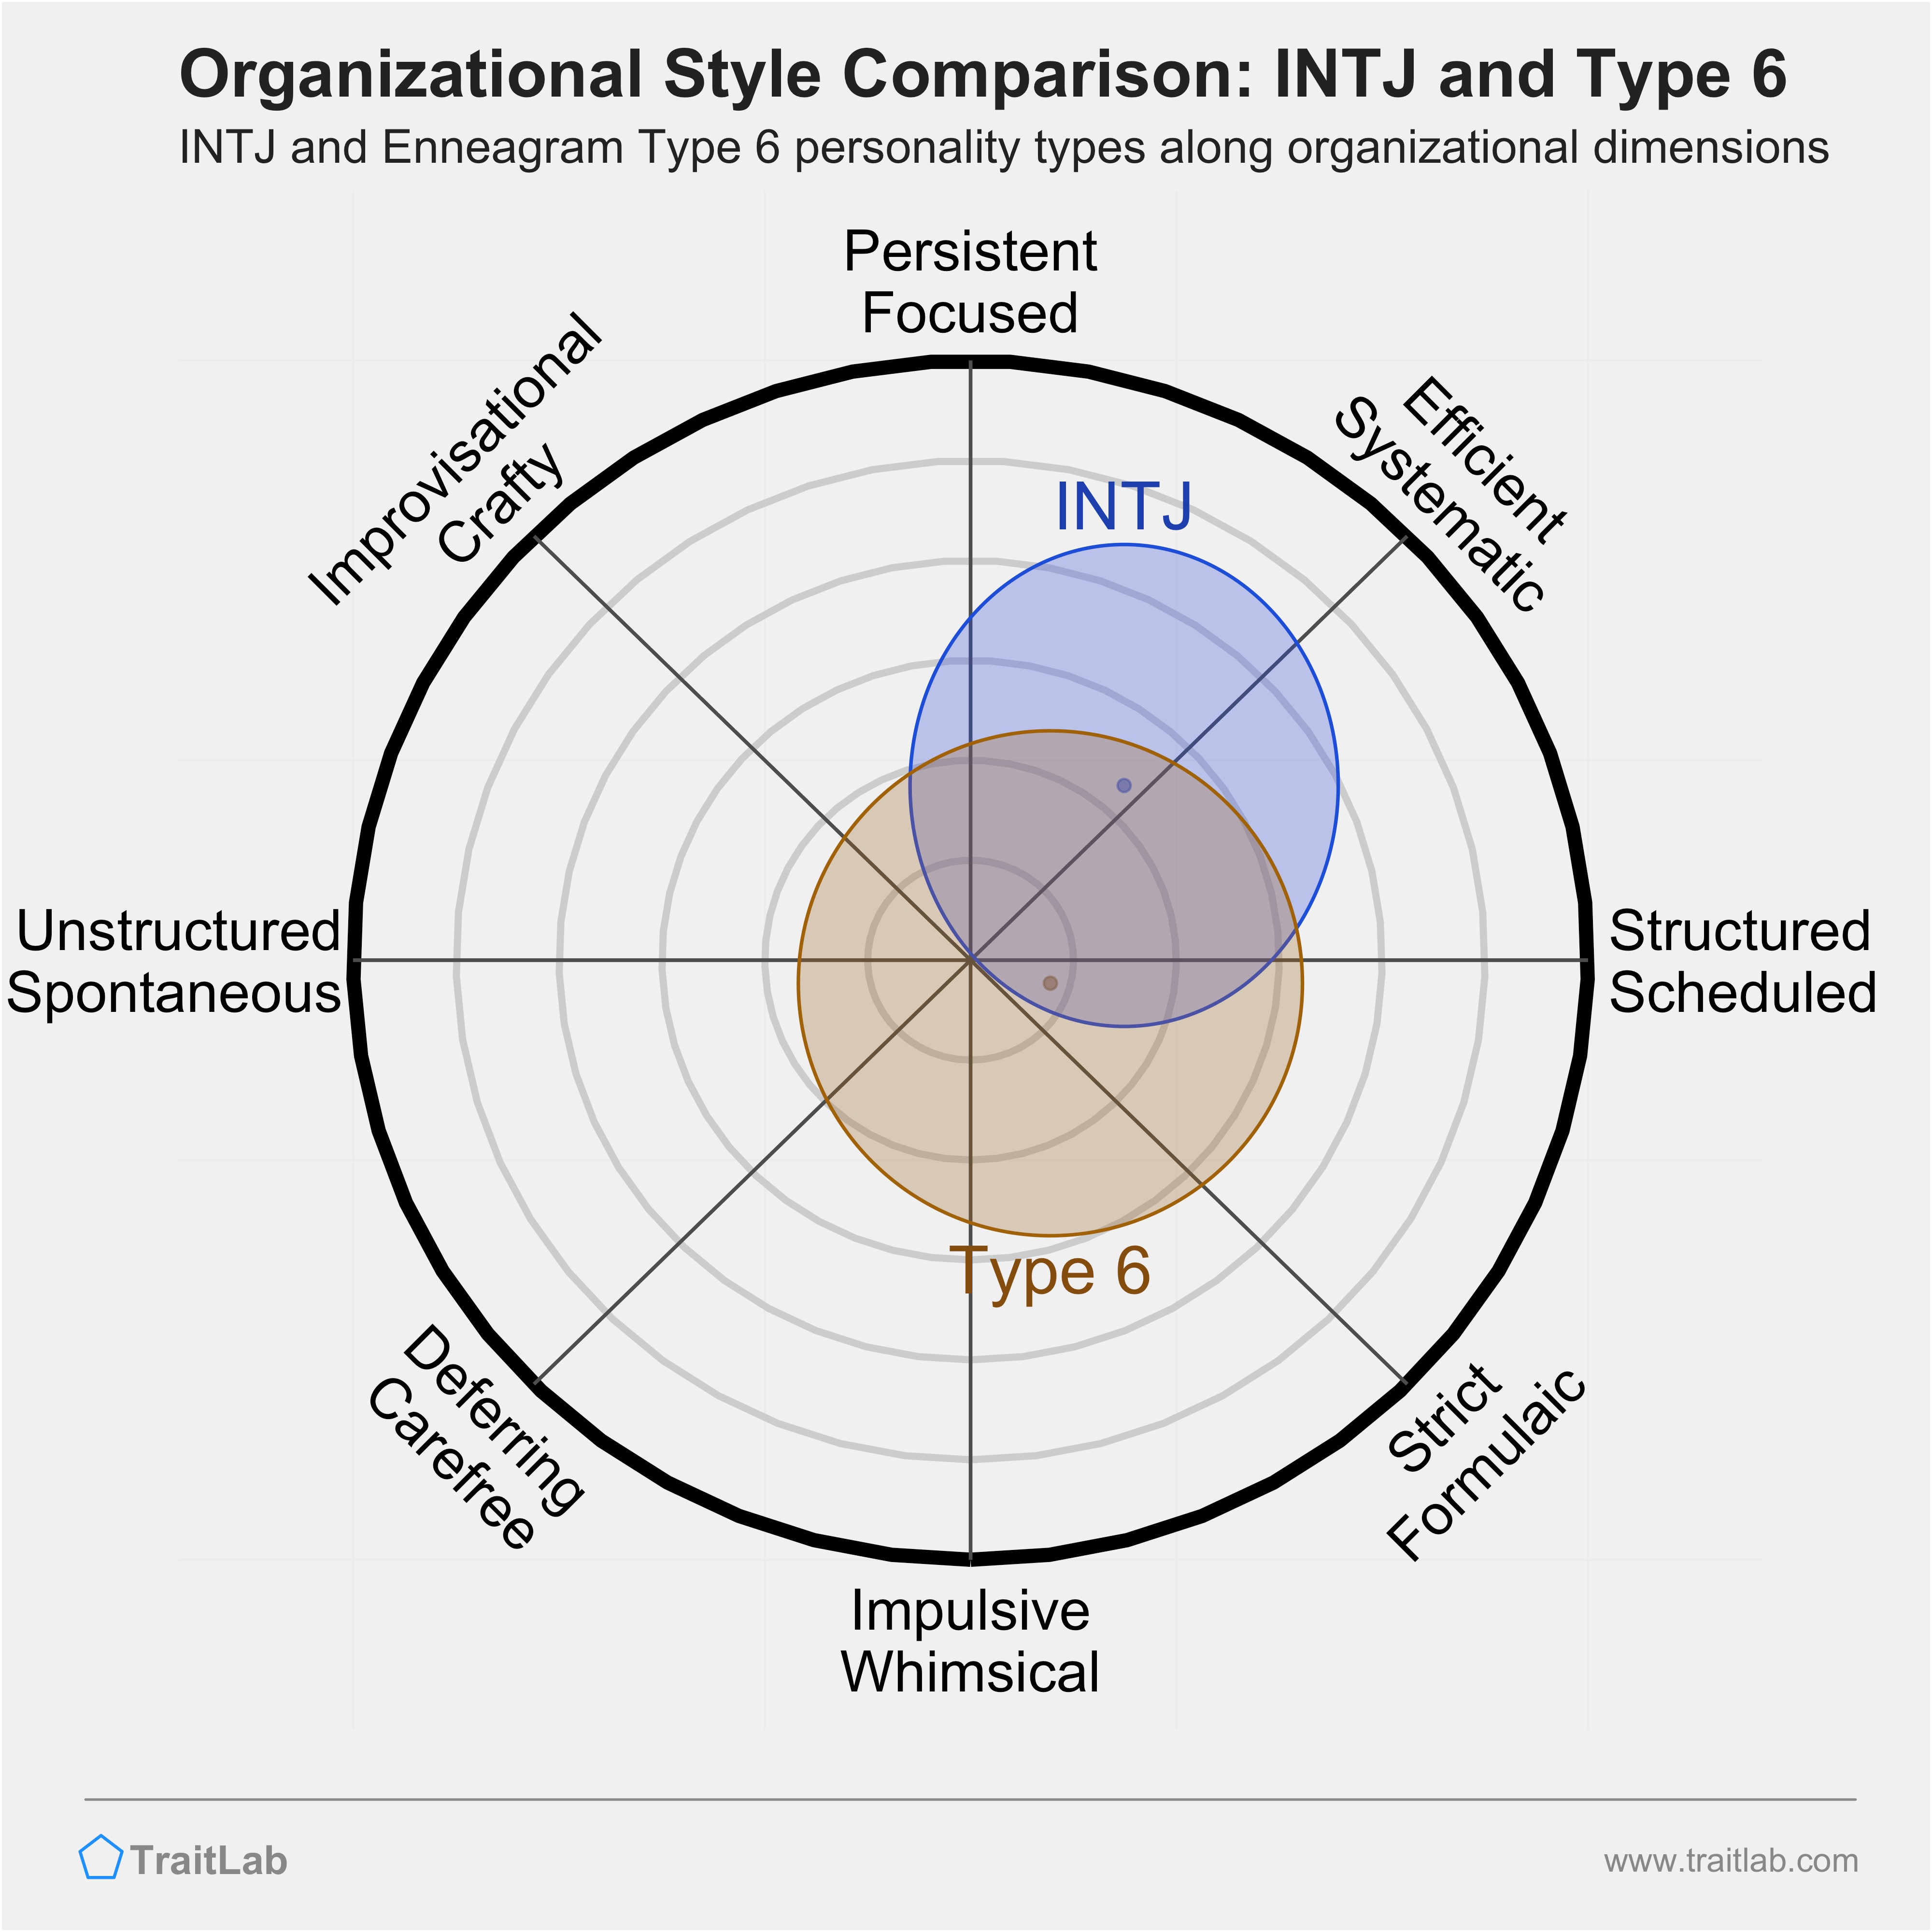 INTJ and Type 6 comparison across organizational dimensions